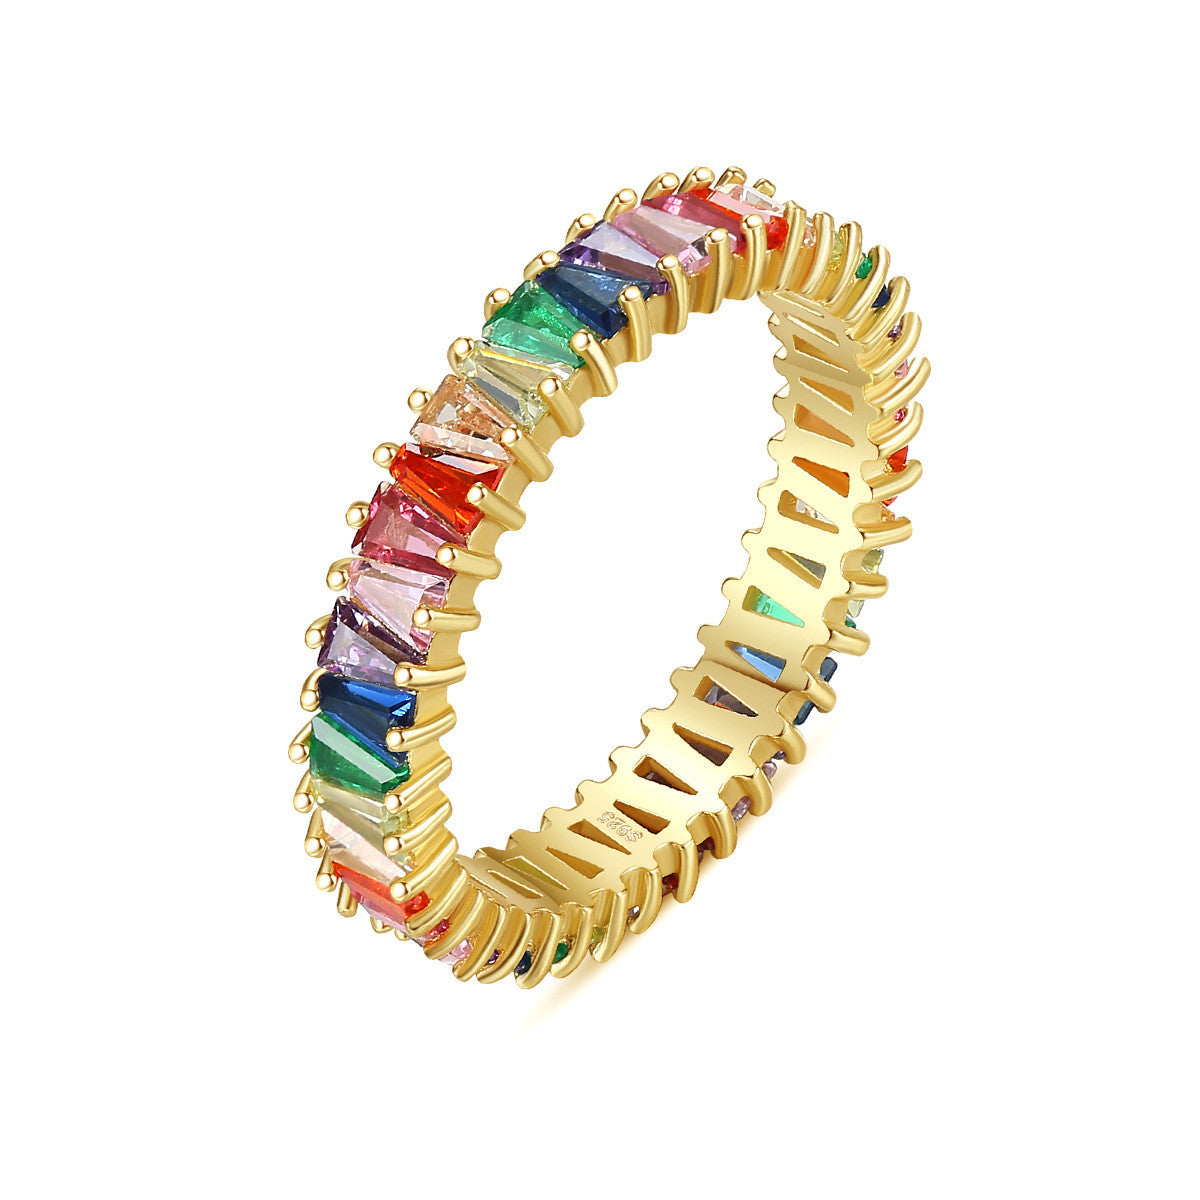 18k Gold European Beauty Ring with Retro Rainbow Gemstones